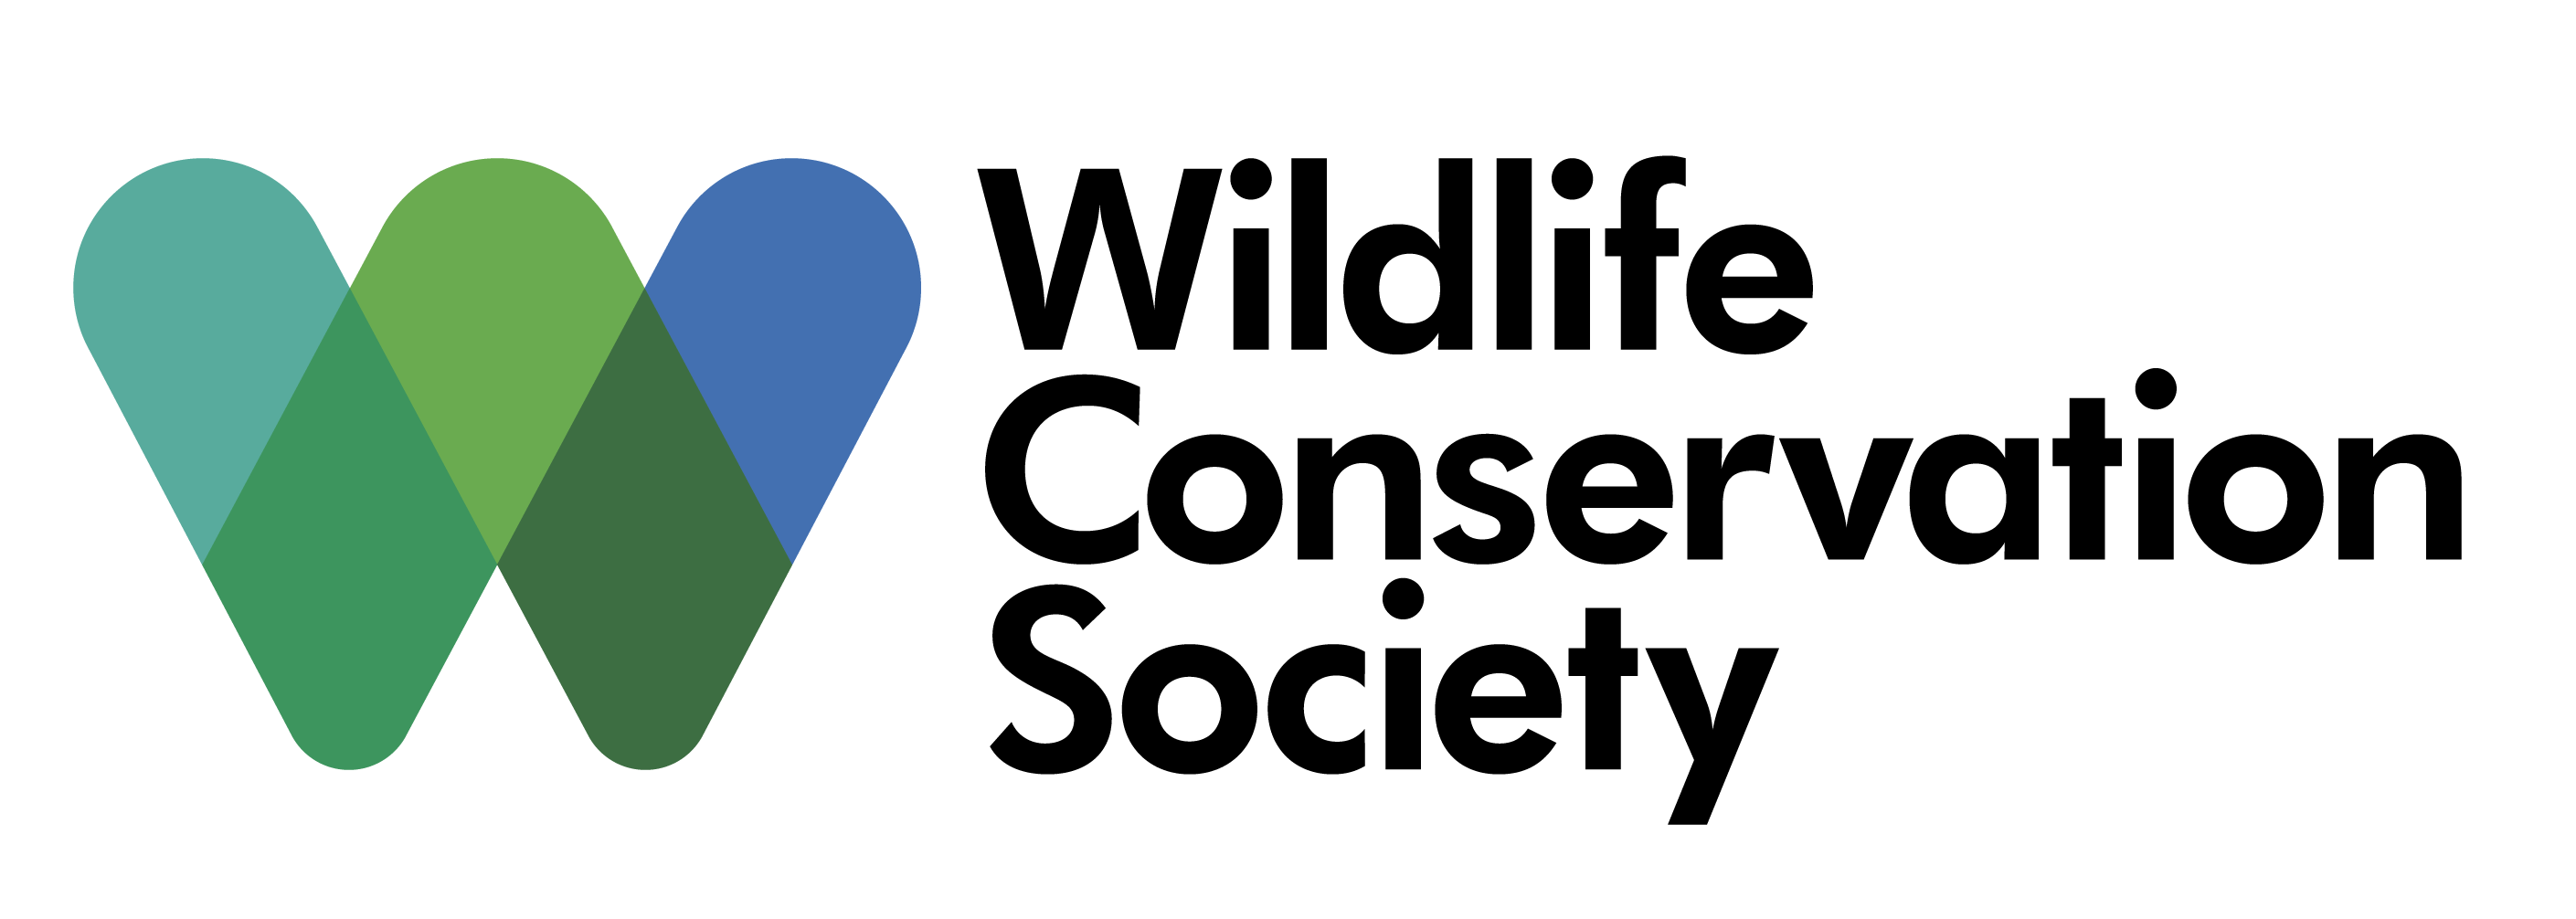 Wcs Logo PNG - 175392